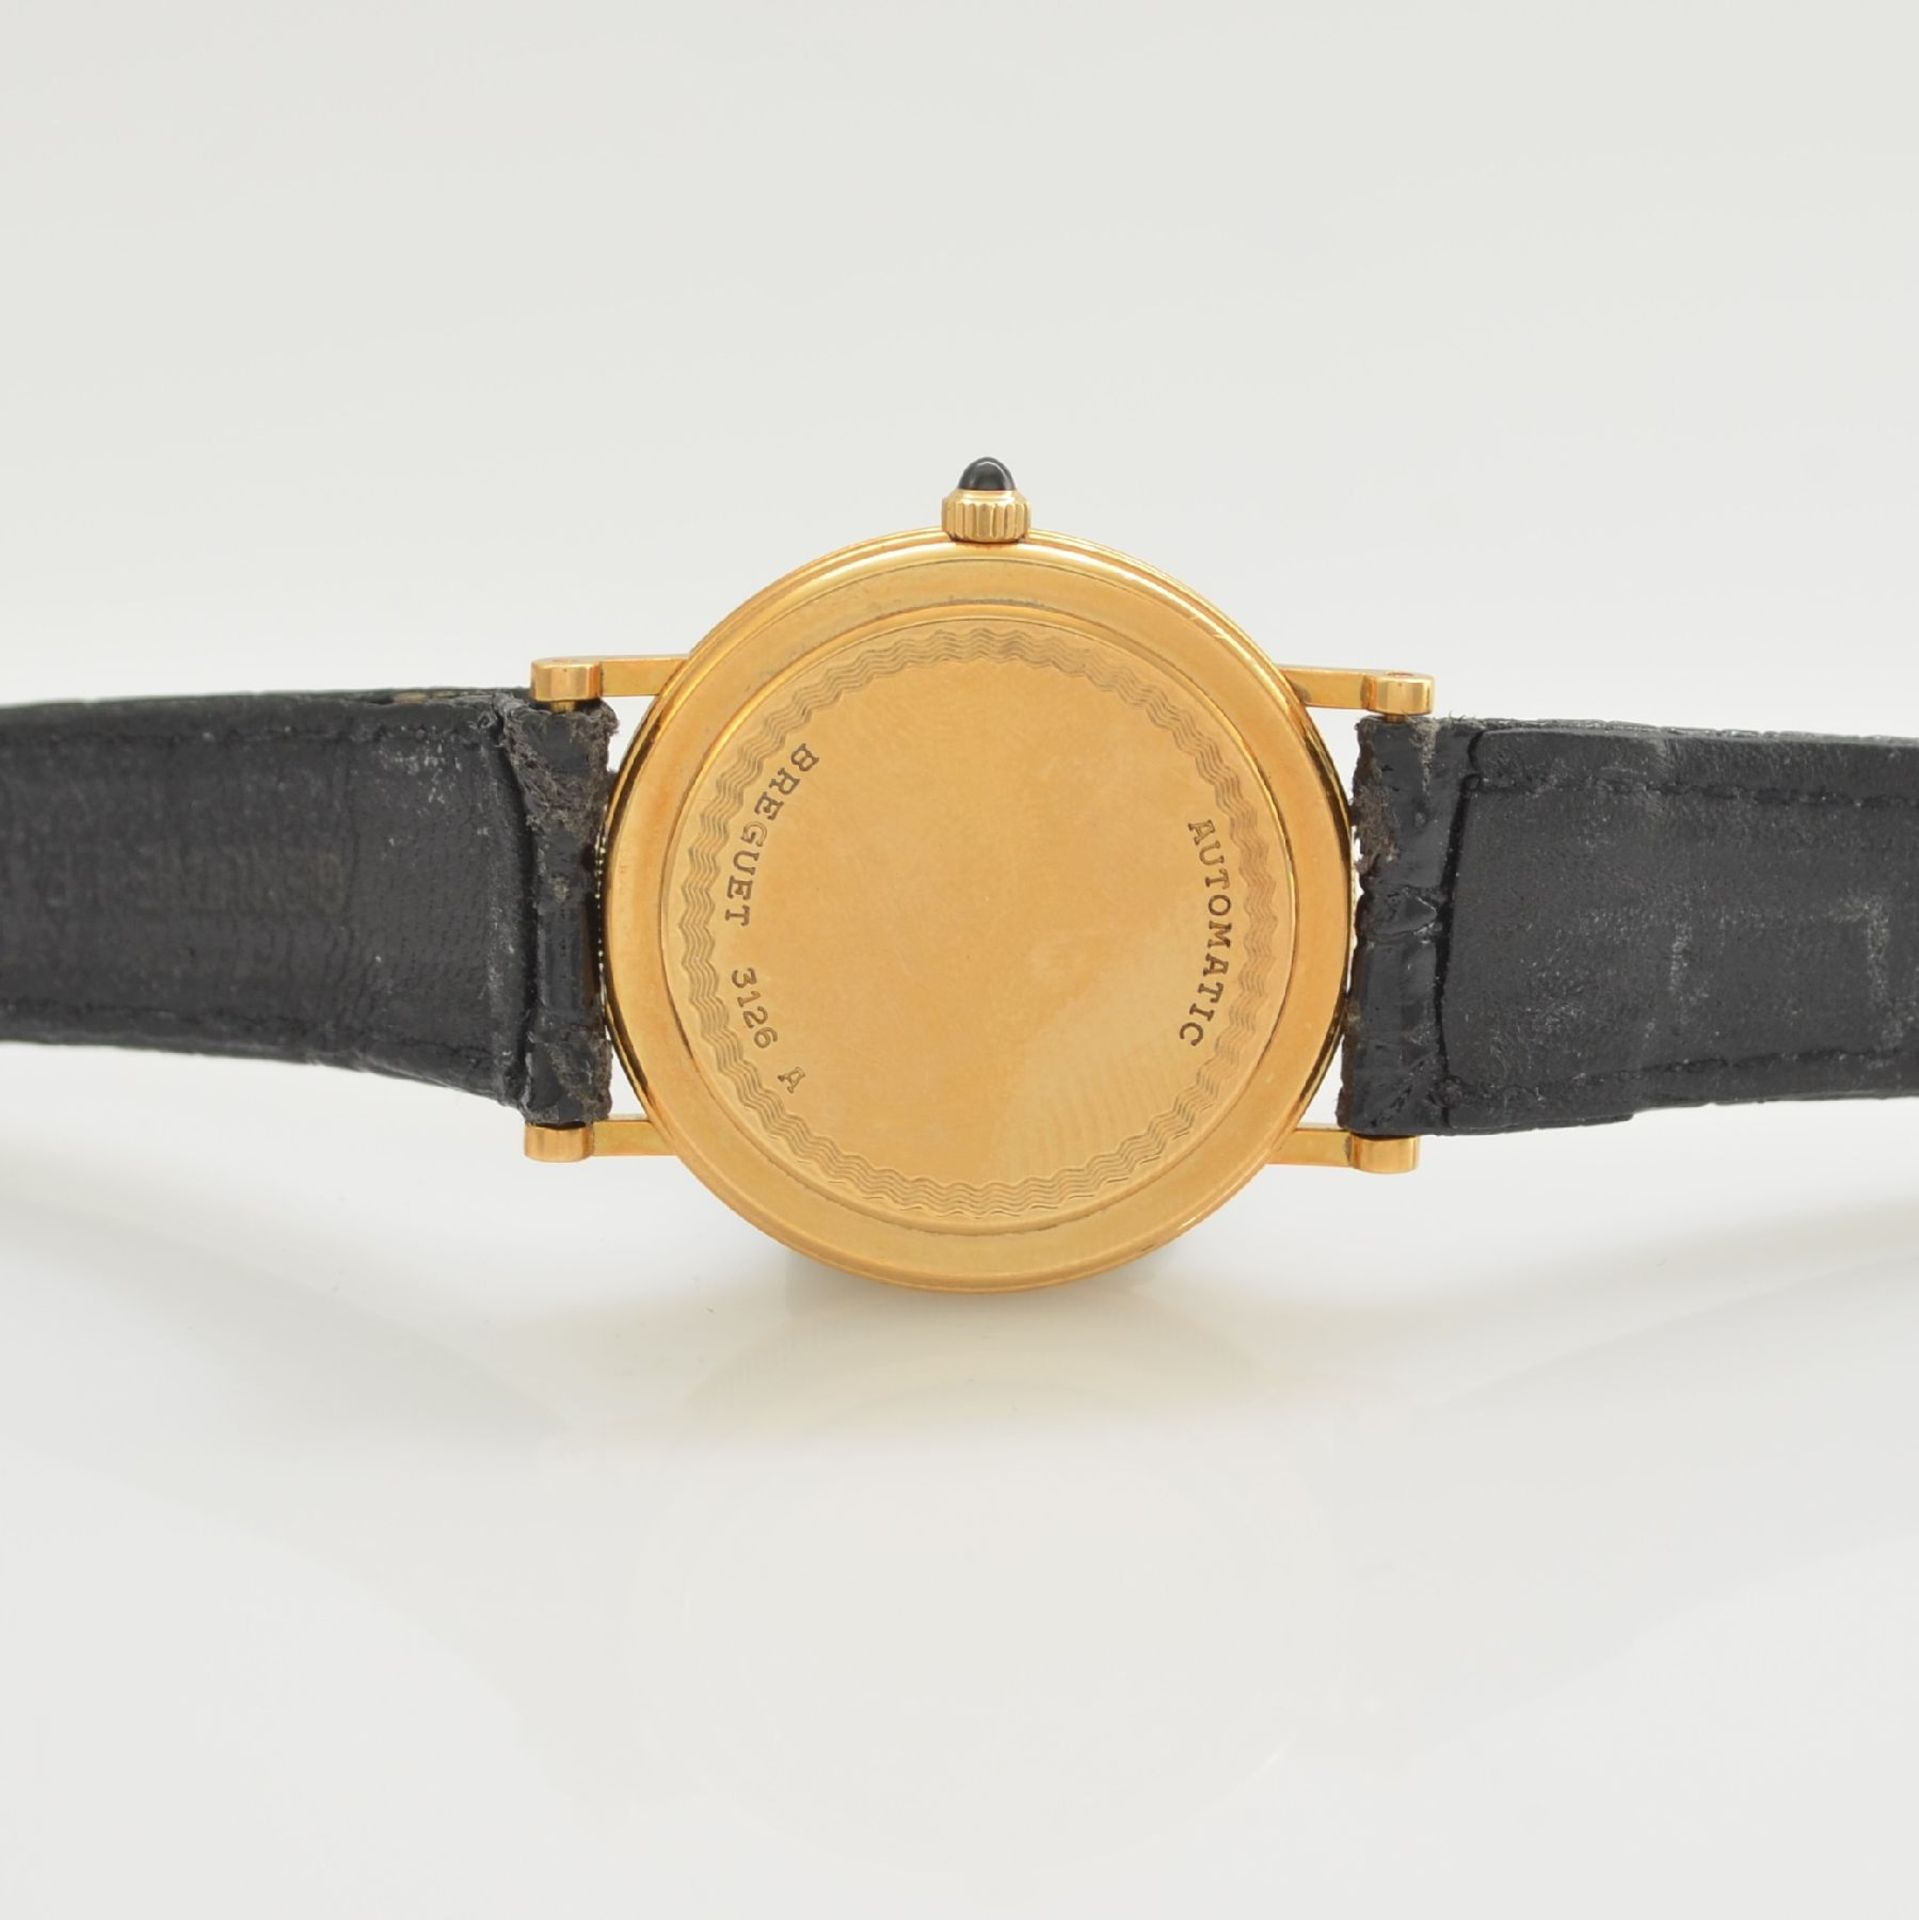 BREGUET Classique Armbanduhr in GG 750/000 No. 3126, Schweiz um 1990, 3-teil. Geh. inkl. Lederband - Bild 6 aus 6